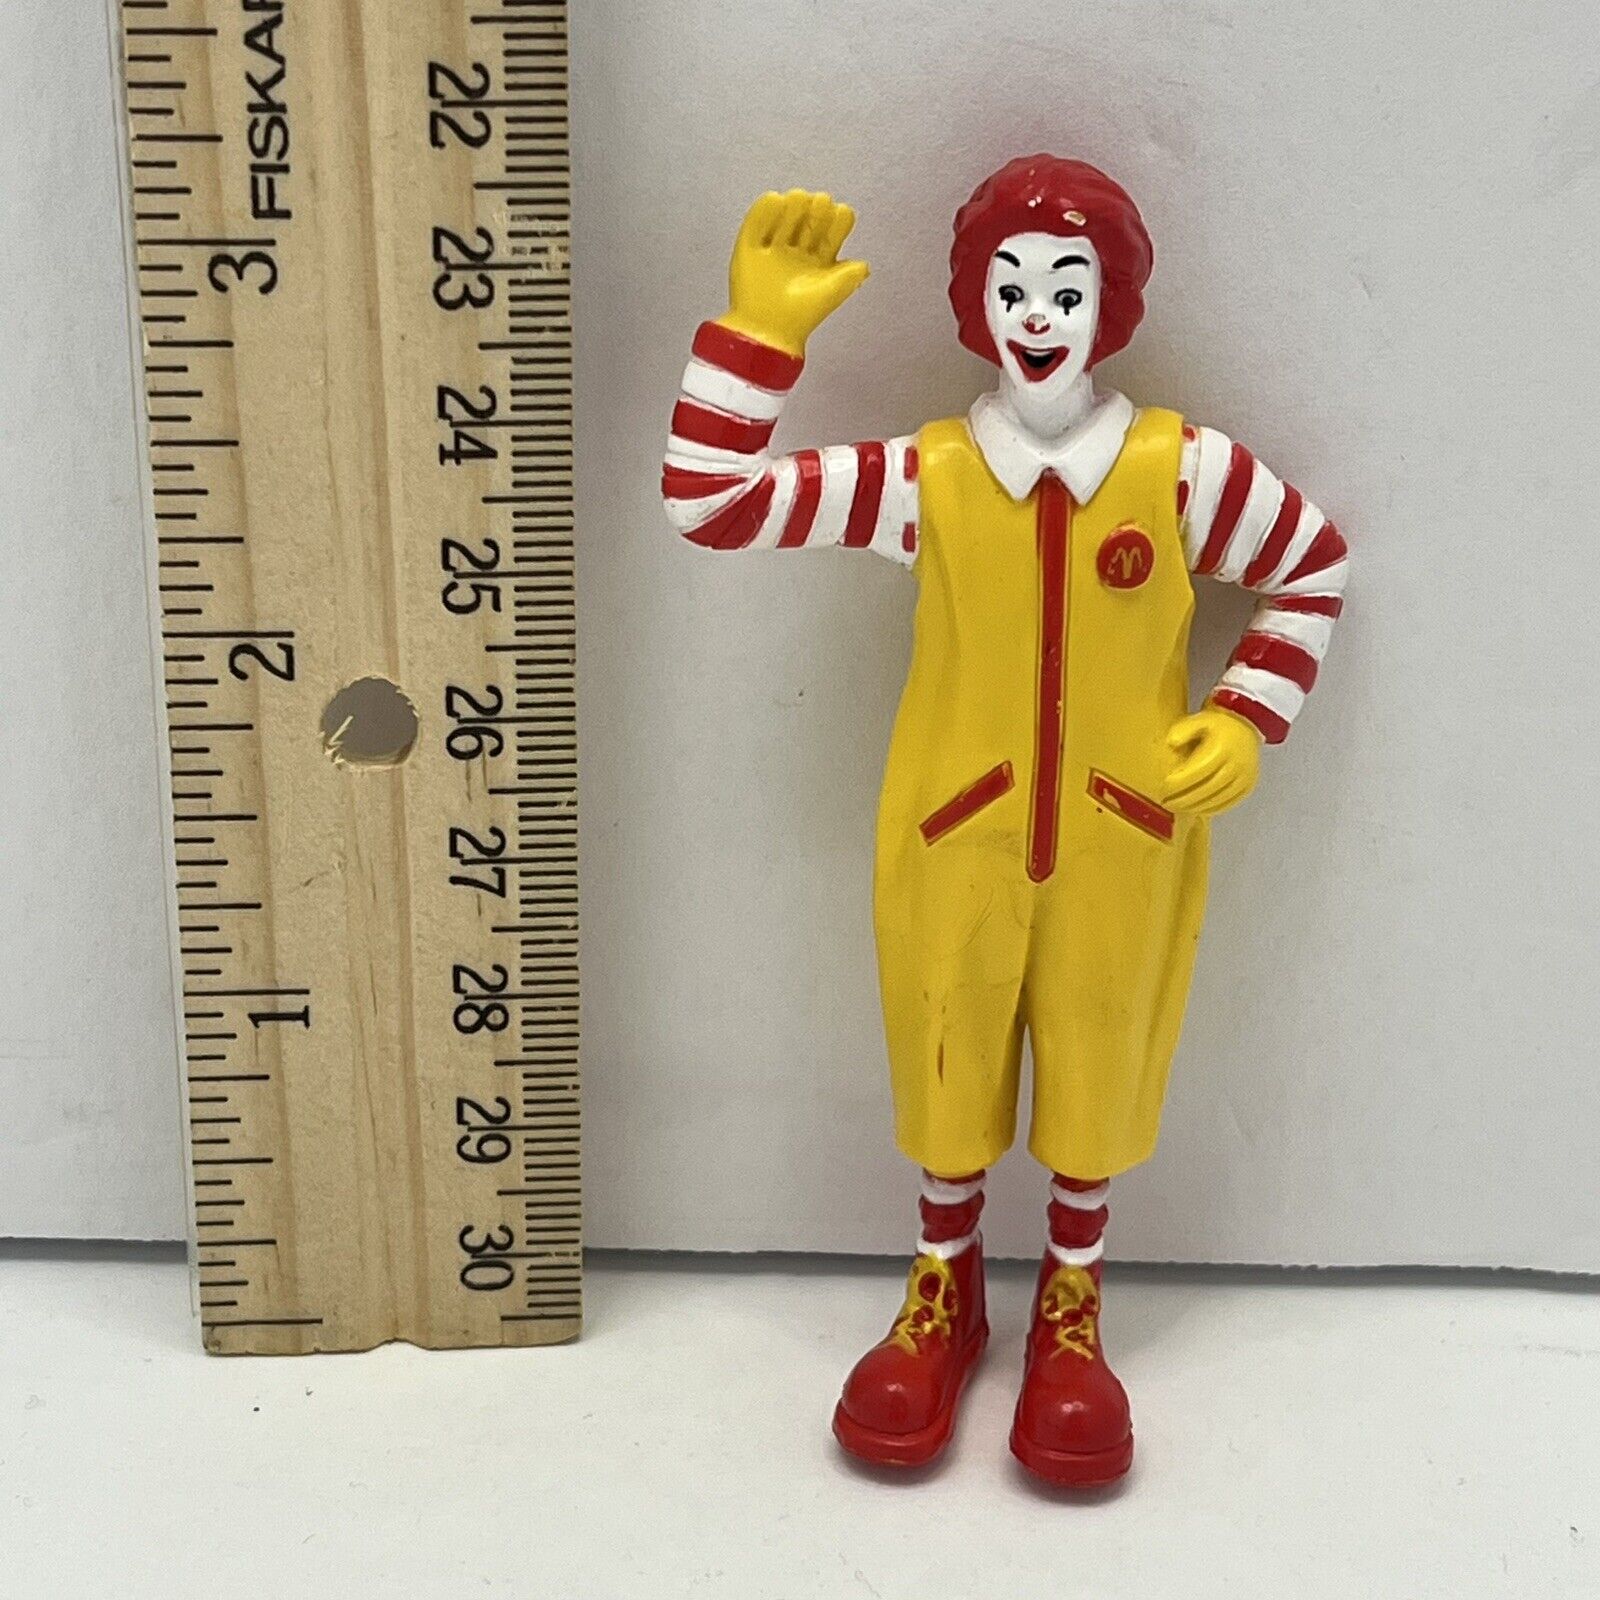 3”  Ronald McDonald Toy Figure